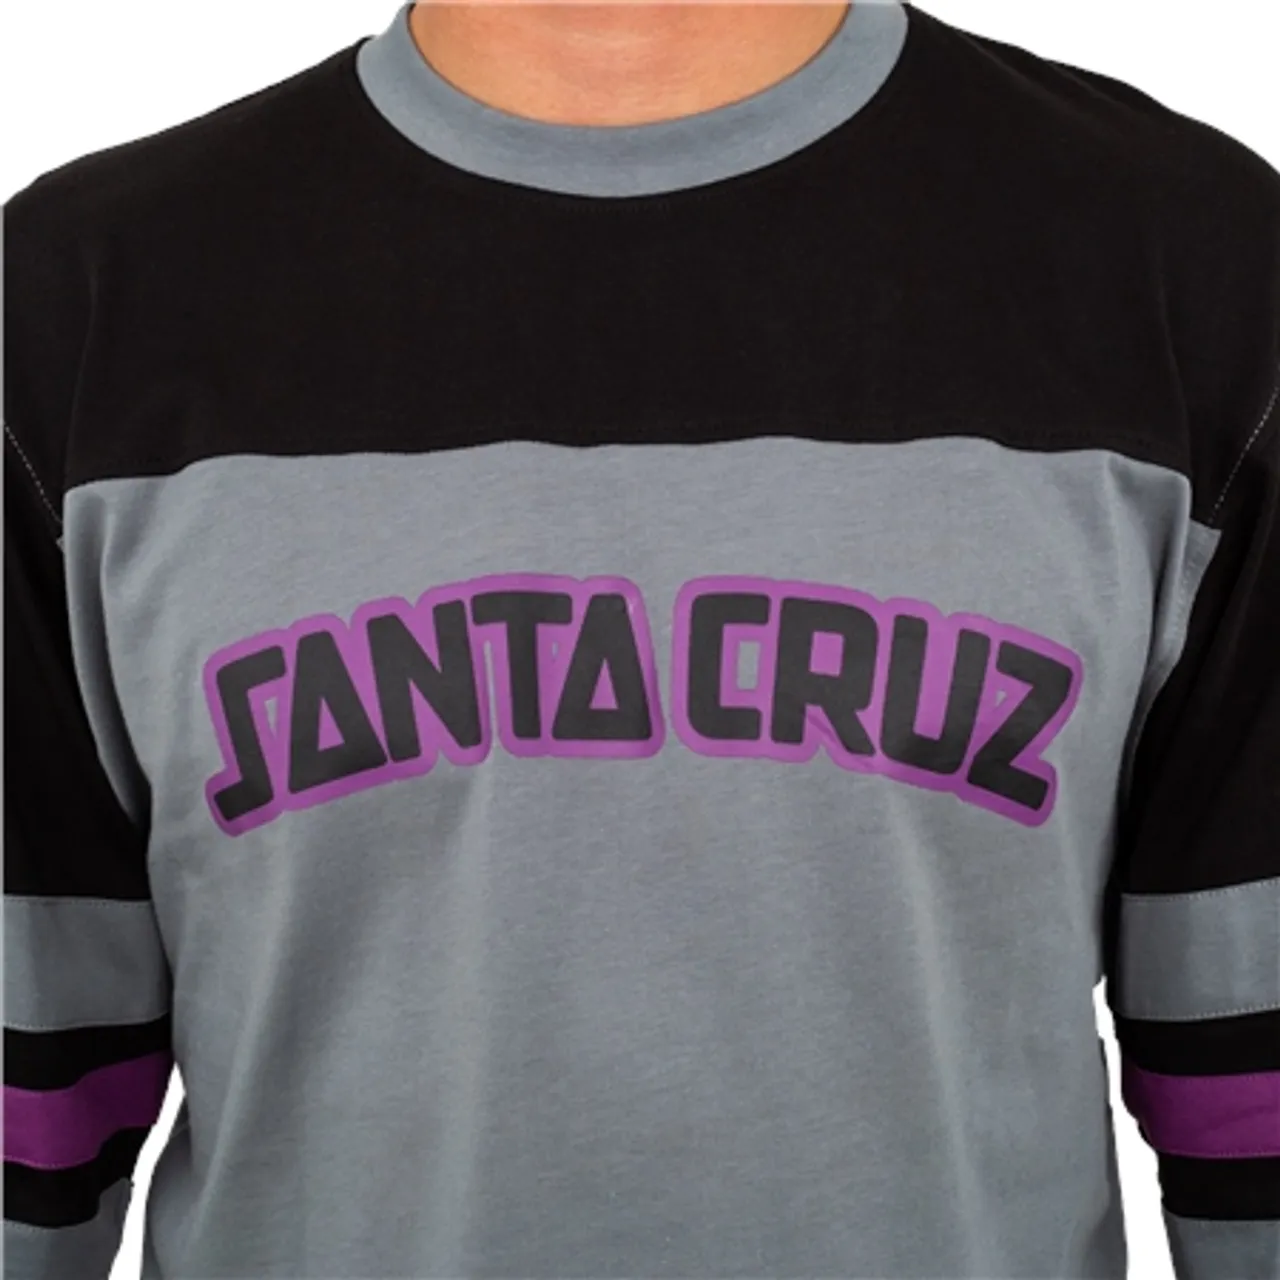 Santa Cruz Arch Strip Long Sleeve T-Shirt - Iron